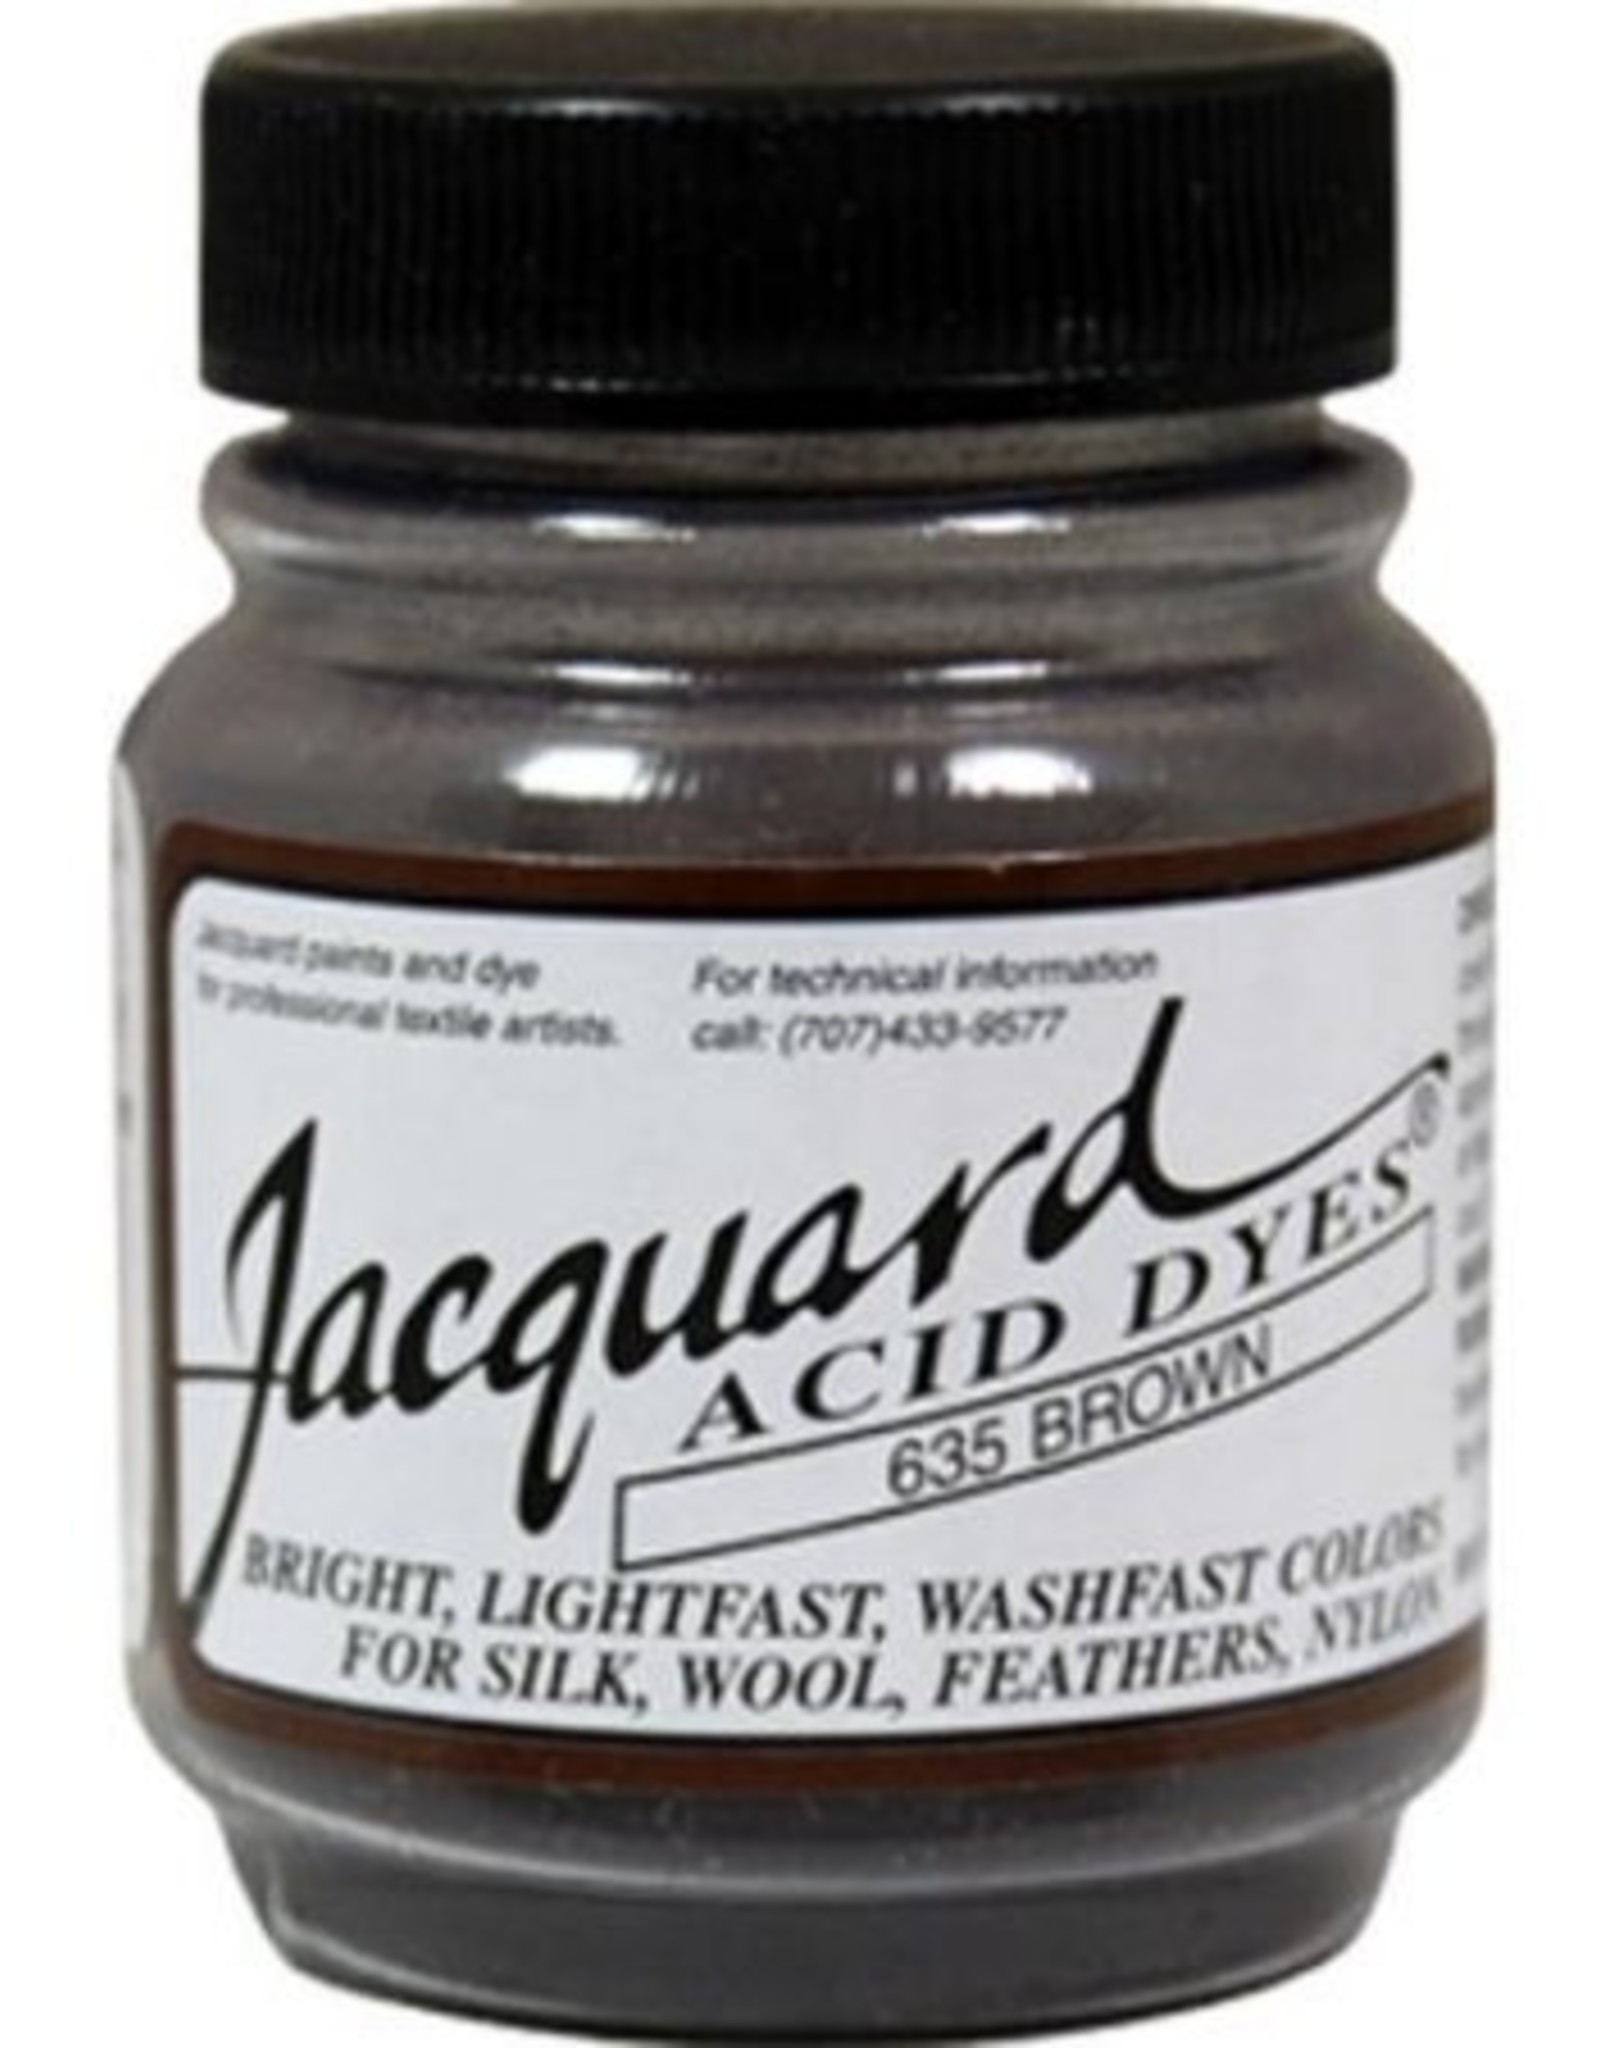 Jacquard Dye Wool Brown